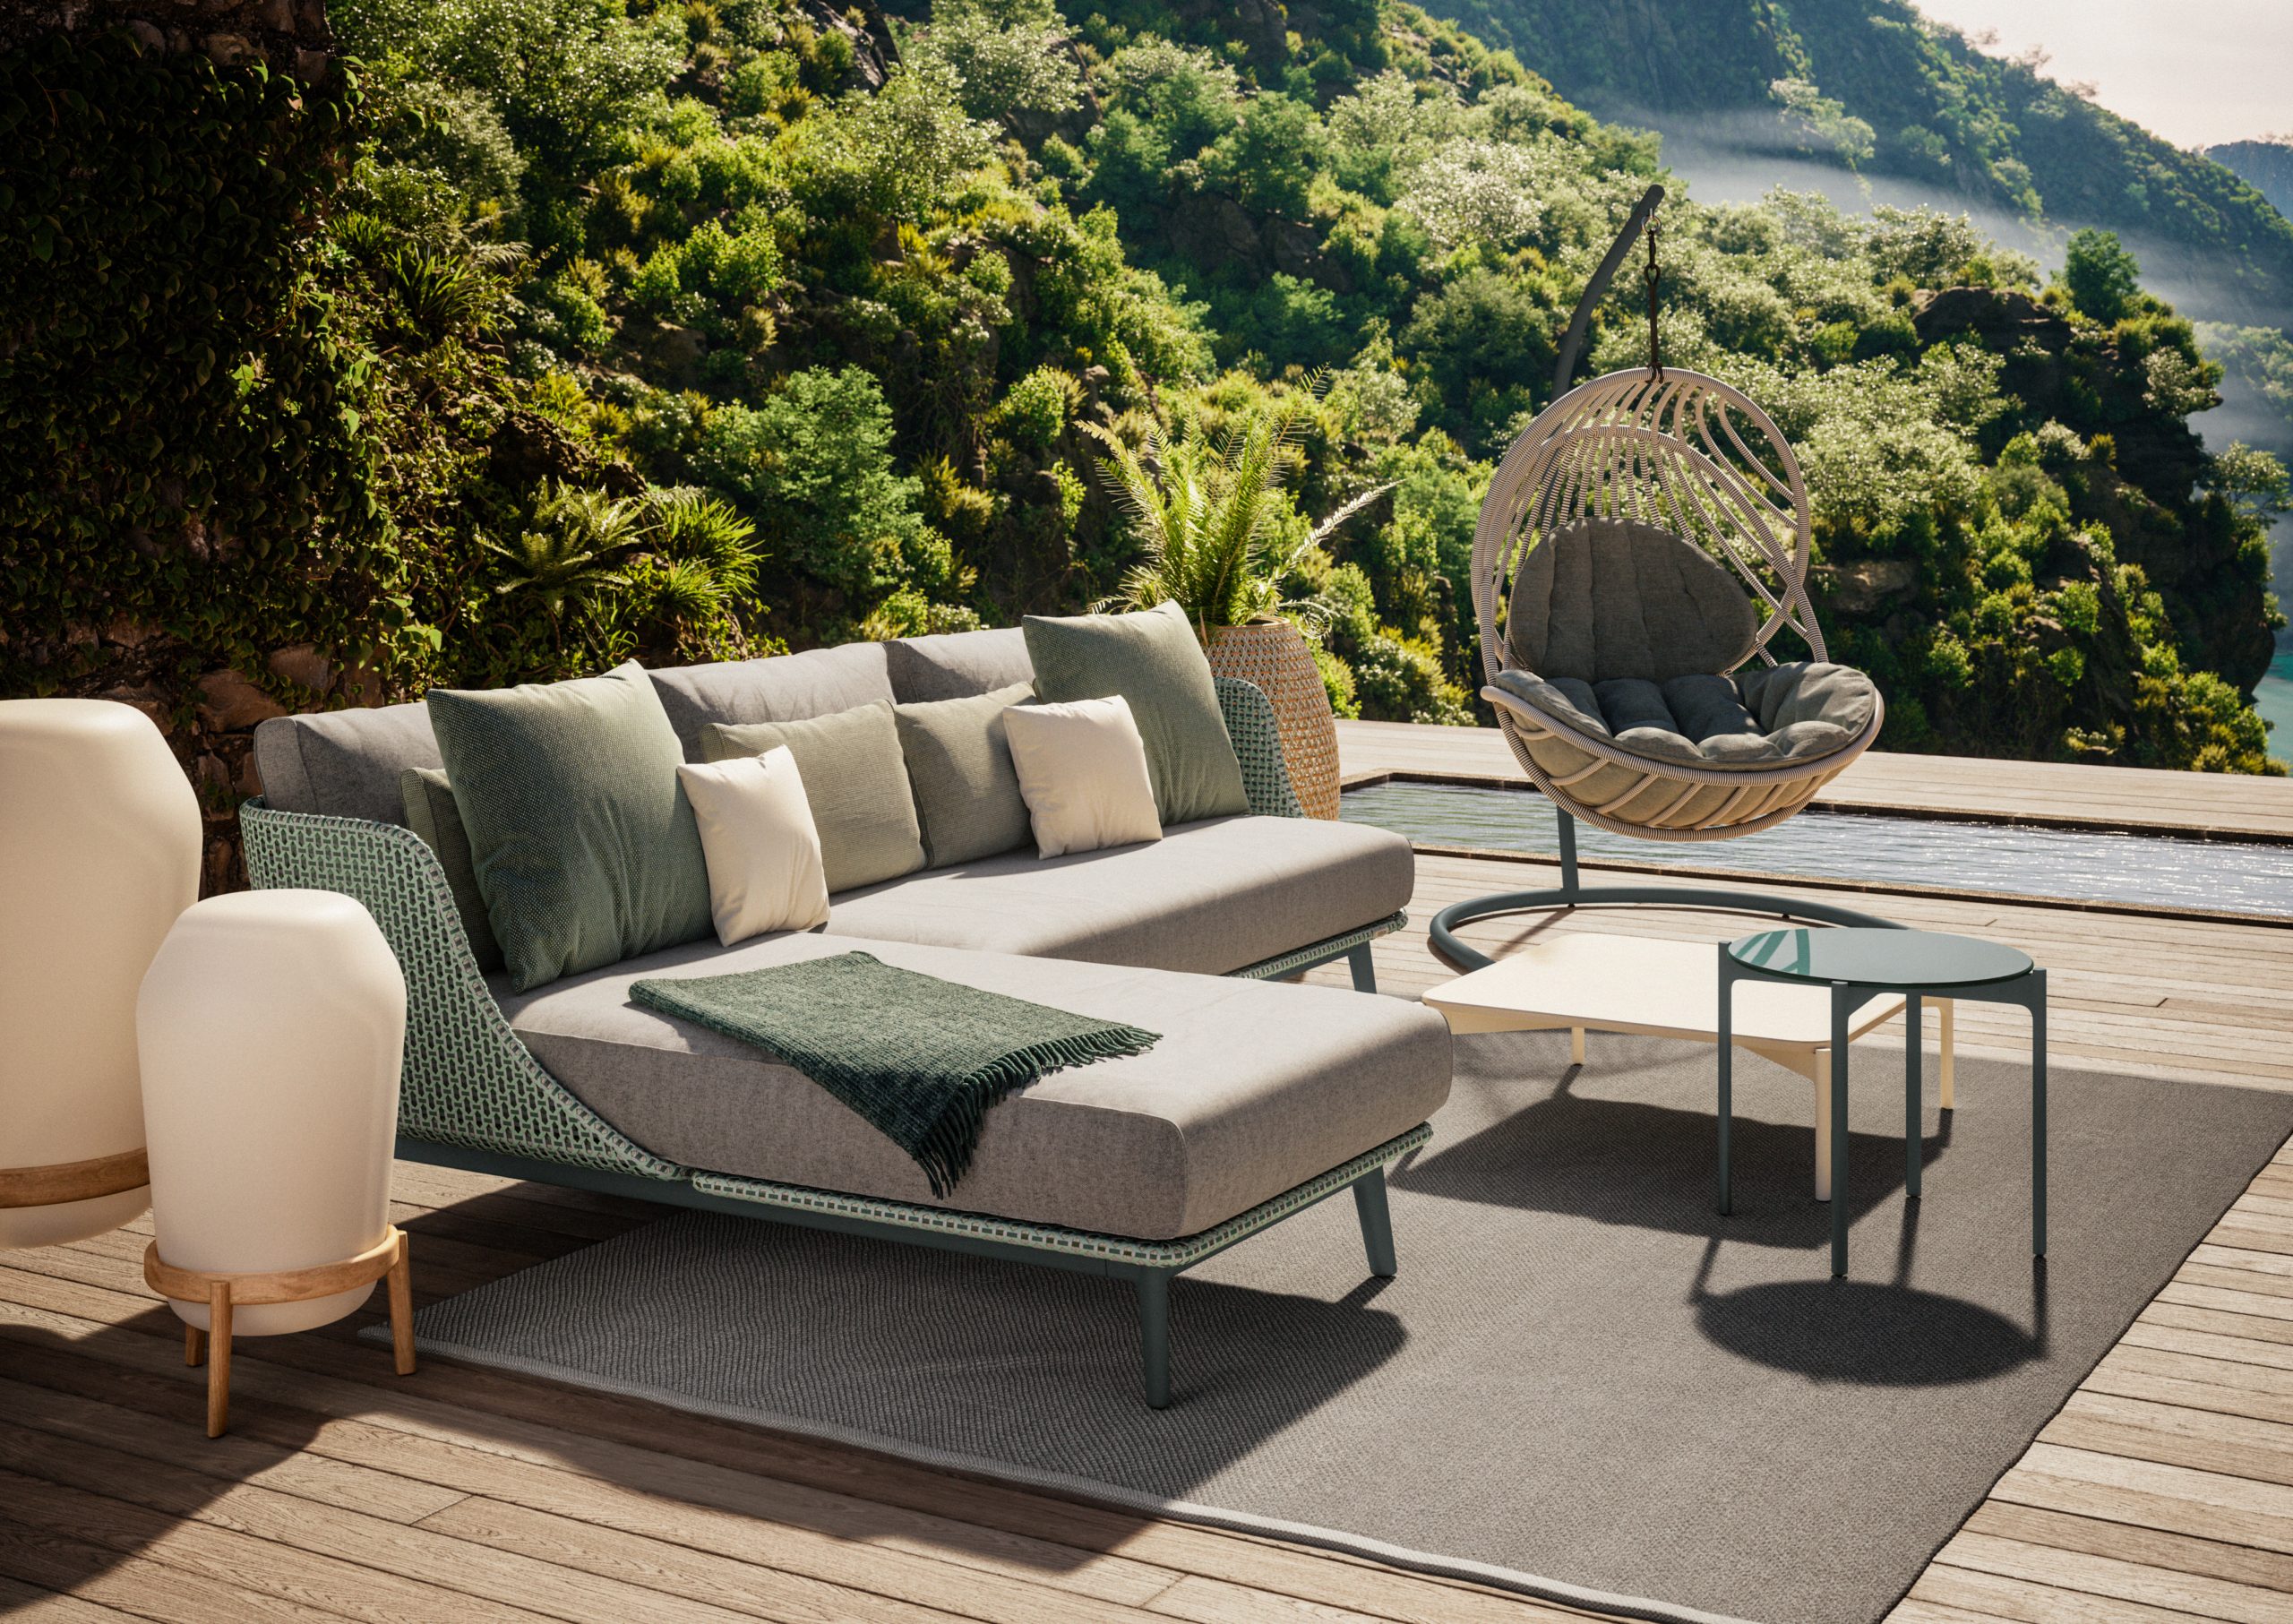 A modern orange woven deck lounge chair in a beautiful desert scene